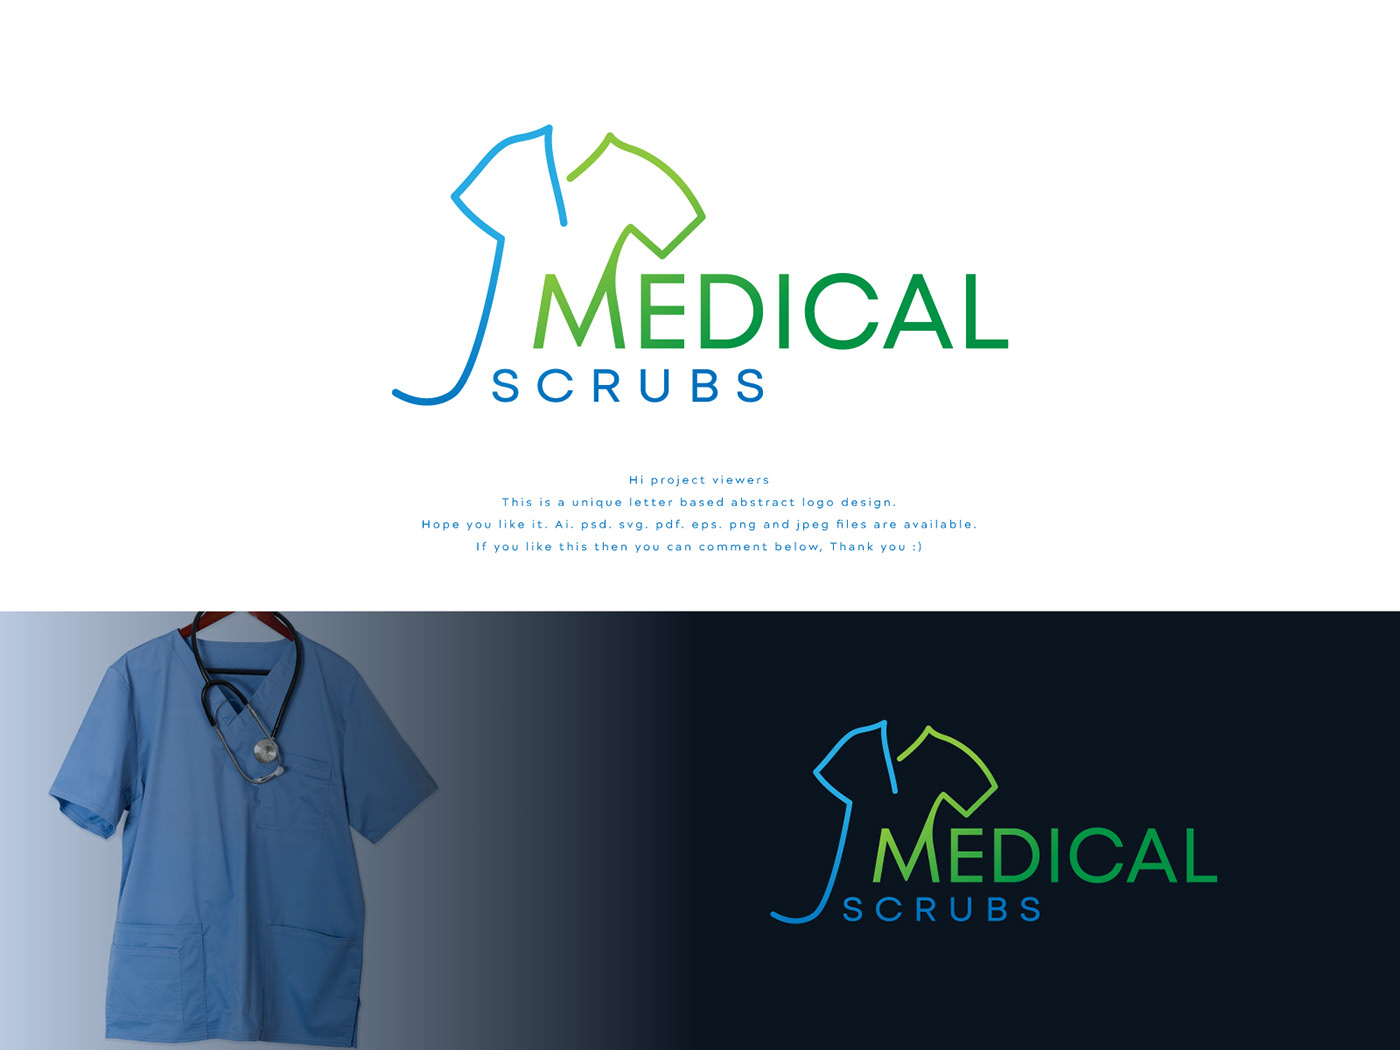 Logo Design medical logo cross logo clothing logo scrubs scrub medical cloths logo medical scrub logo MEDICAL SCRUBS Scrub logo